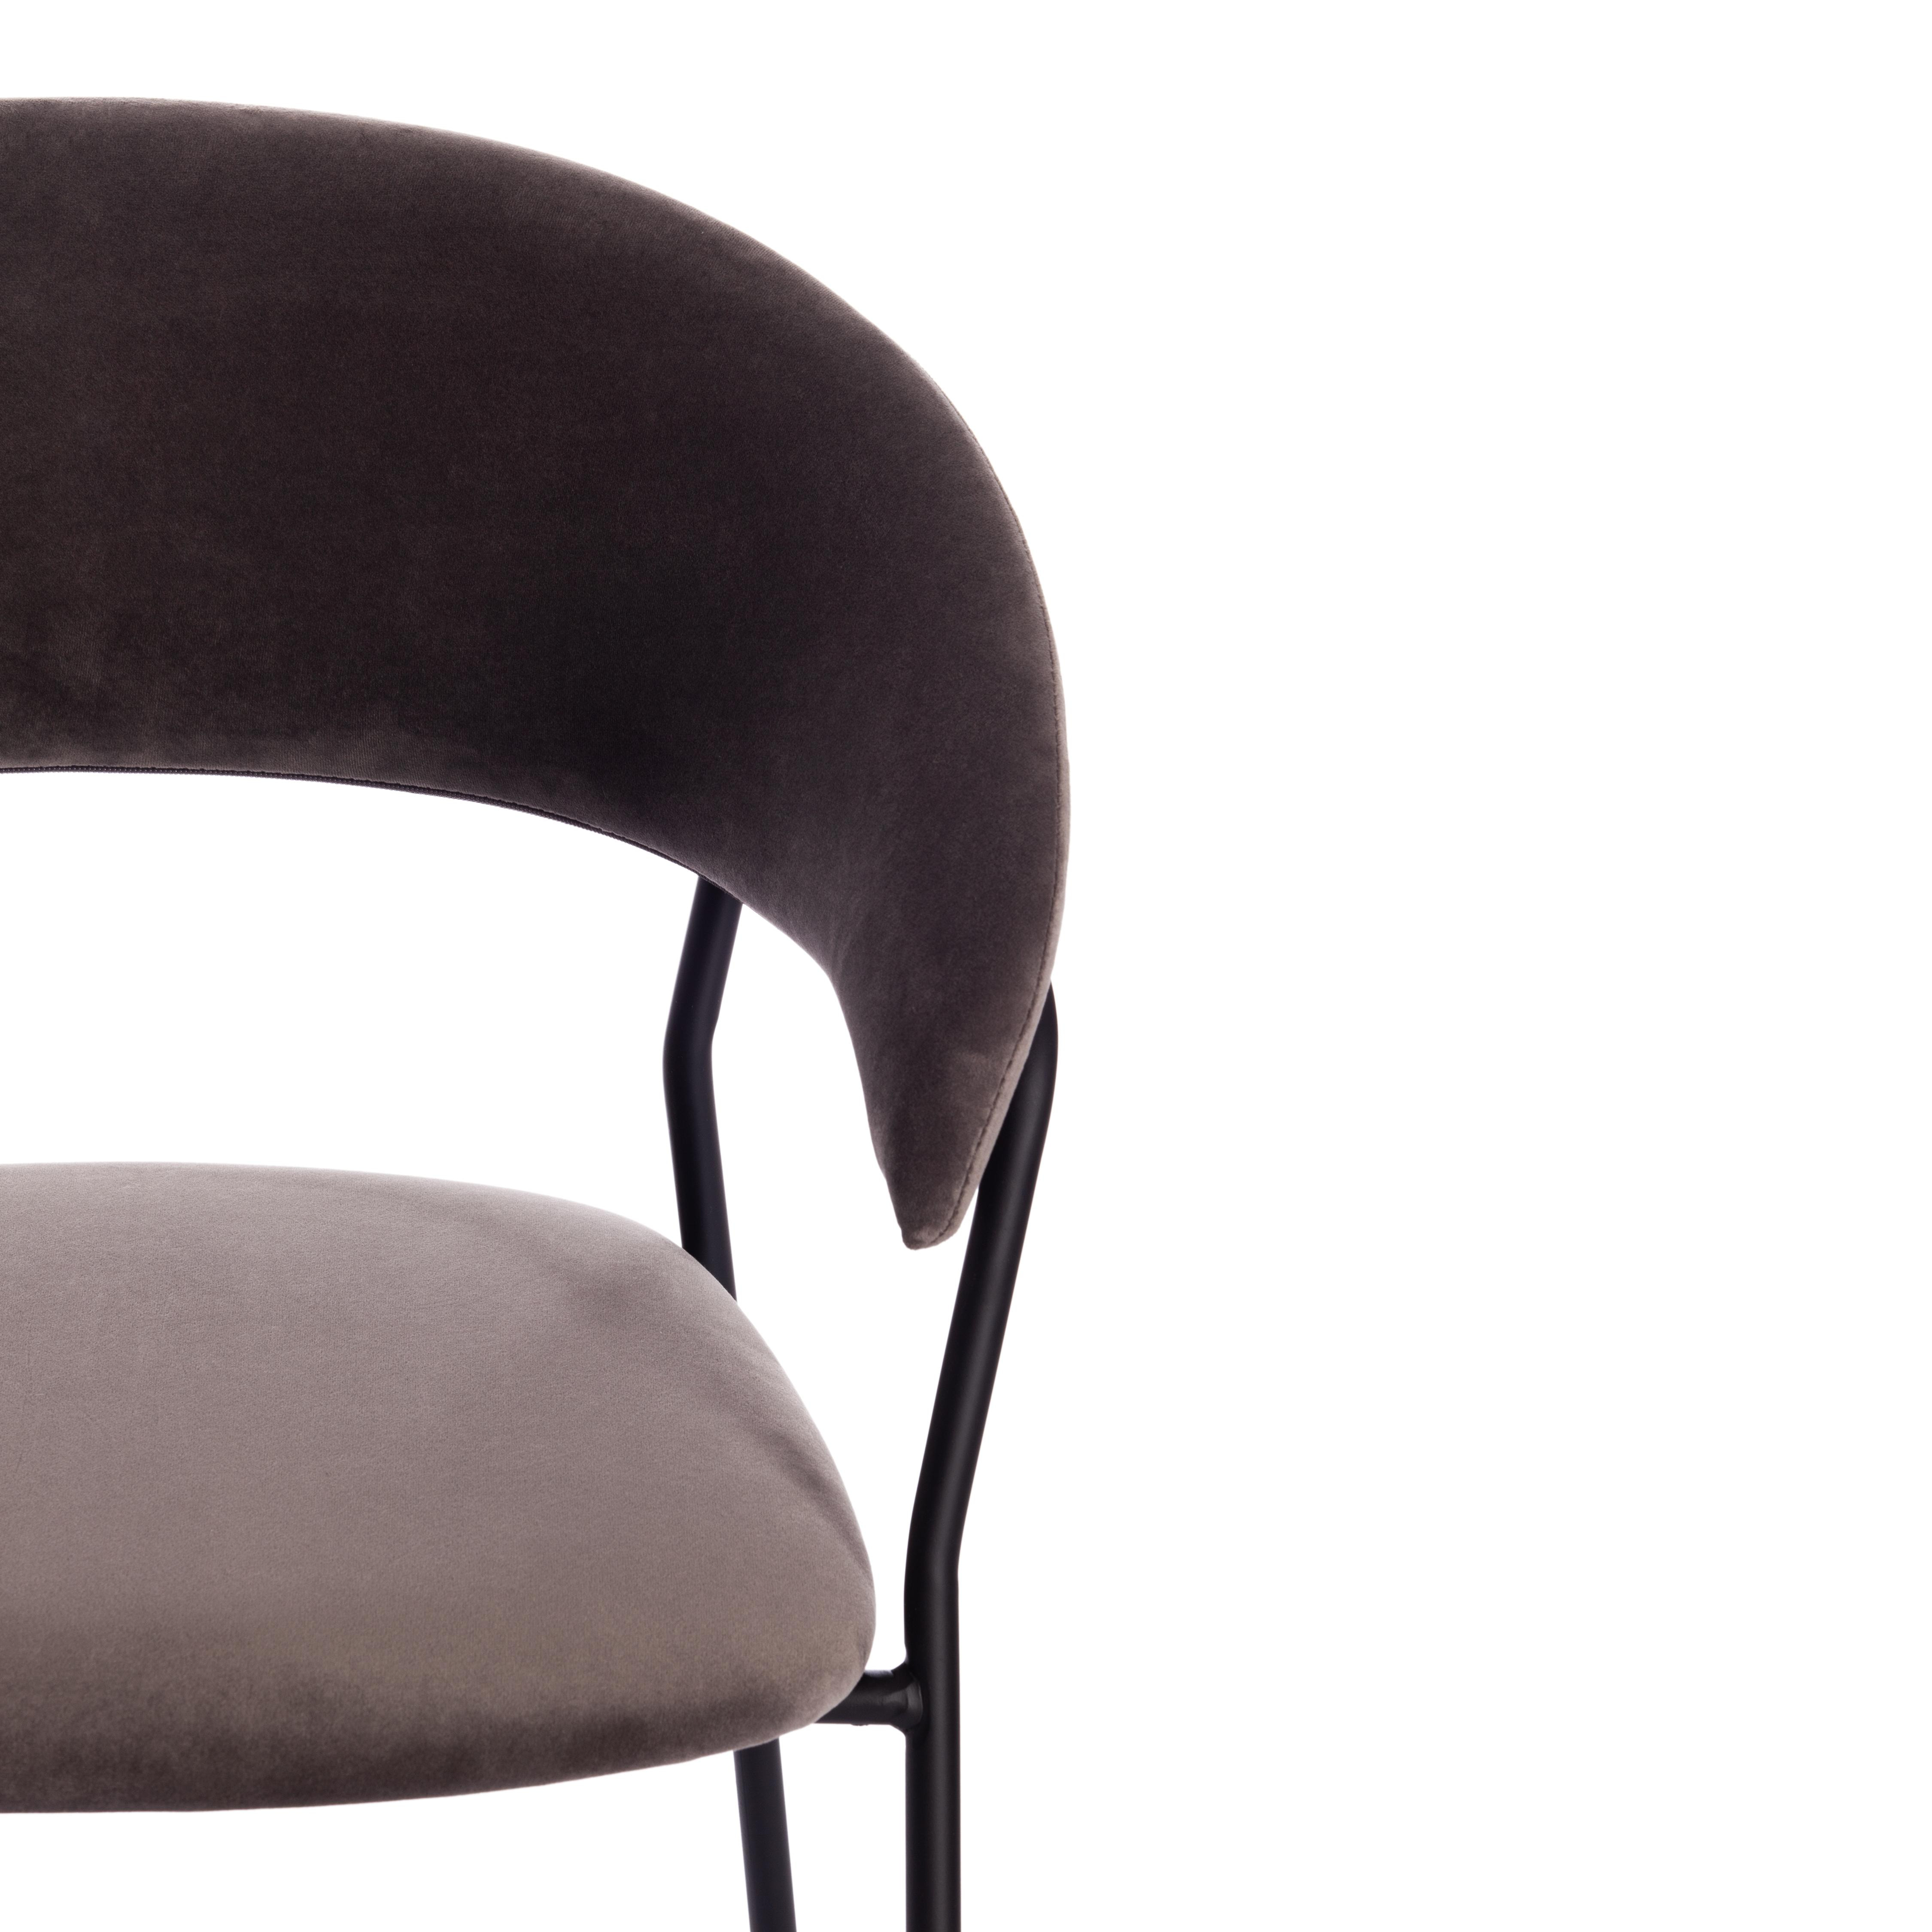 Кресло TURIN (mod. 0129571) металл/вельвет, 56х50х78 см, серо-коричневый S108 (84 Brown)/черный